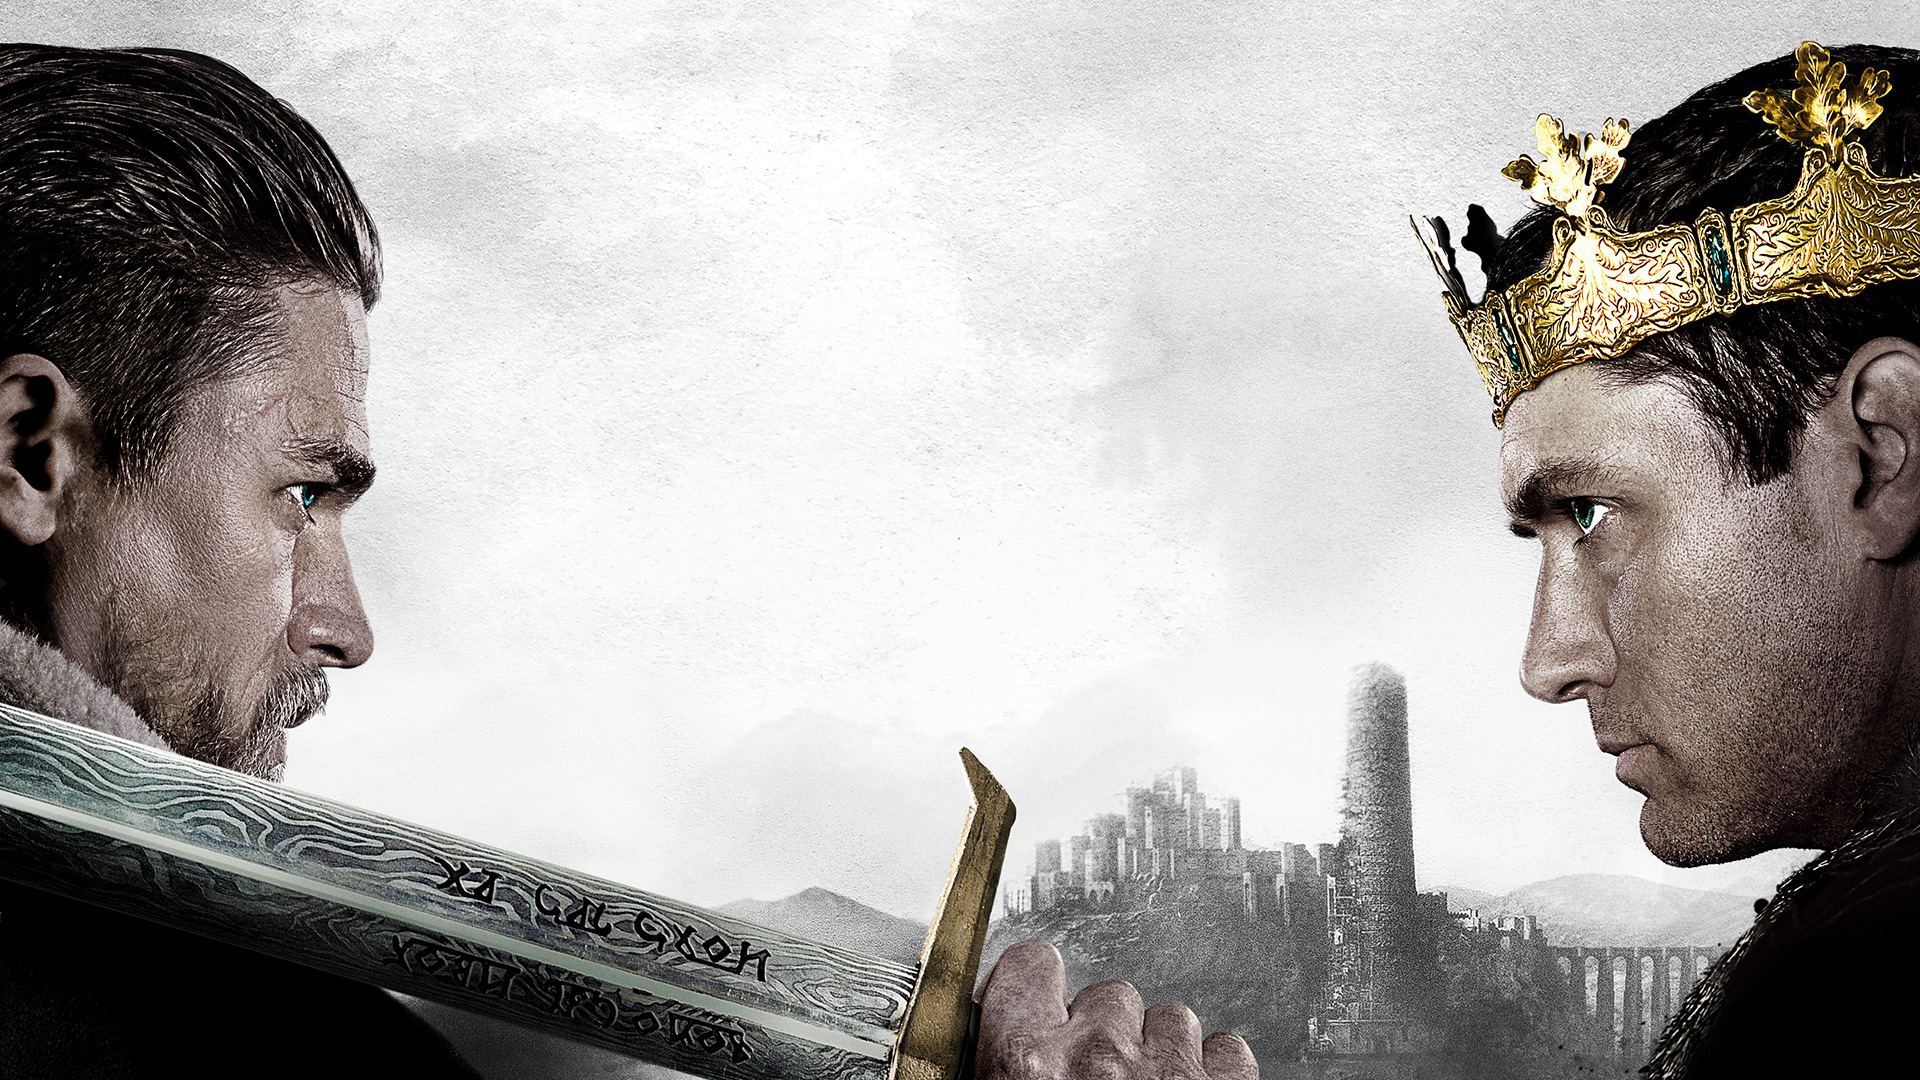 Watch King Arthur: Legend of the Sword